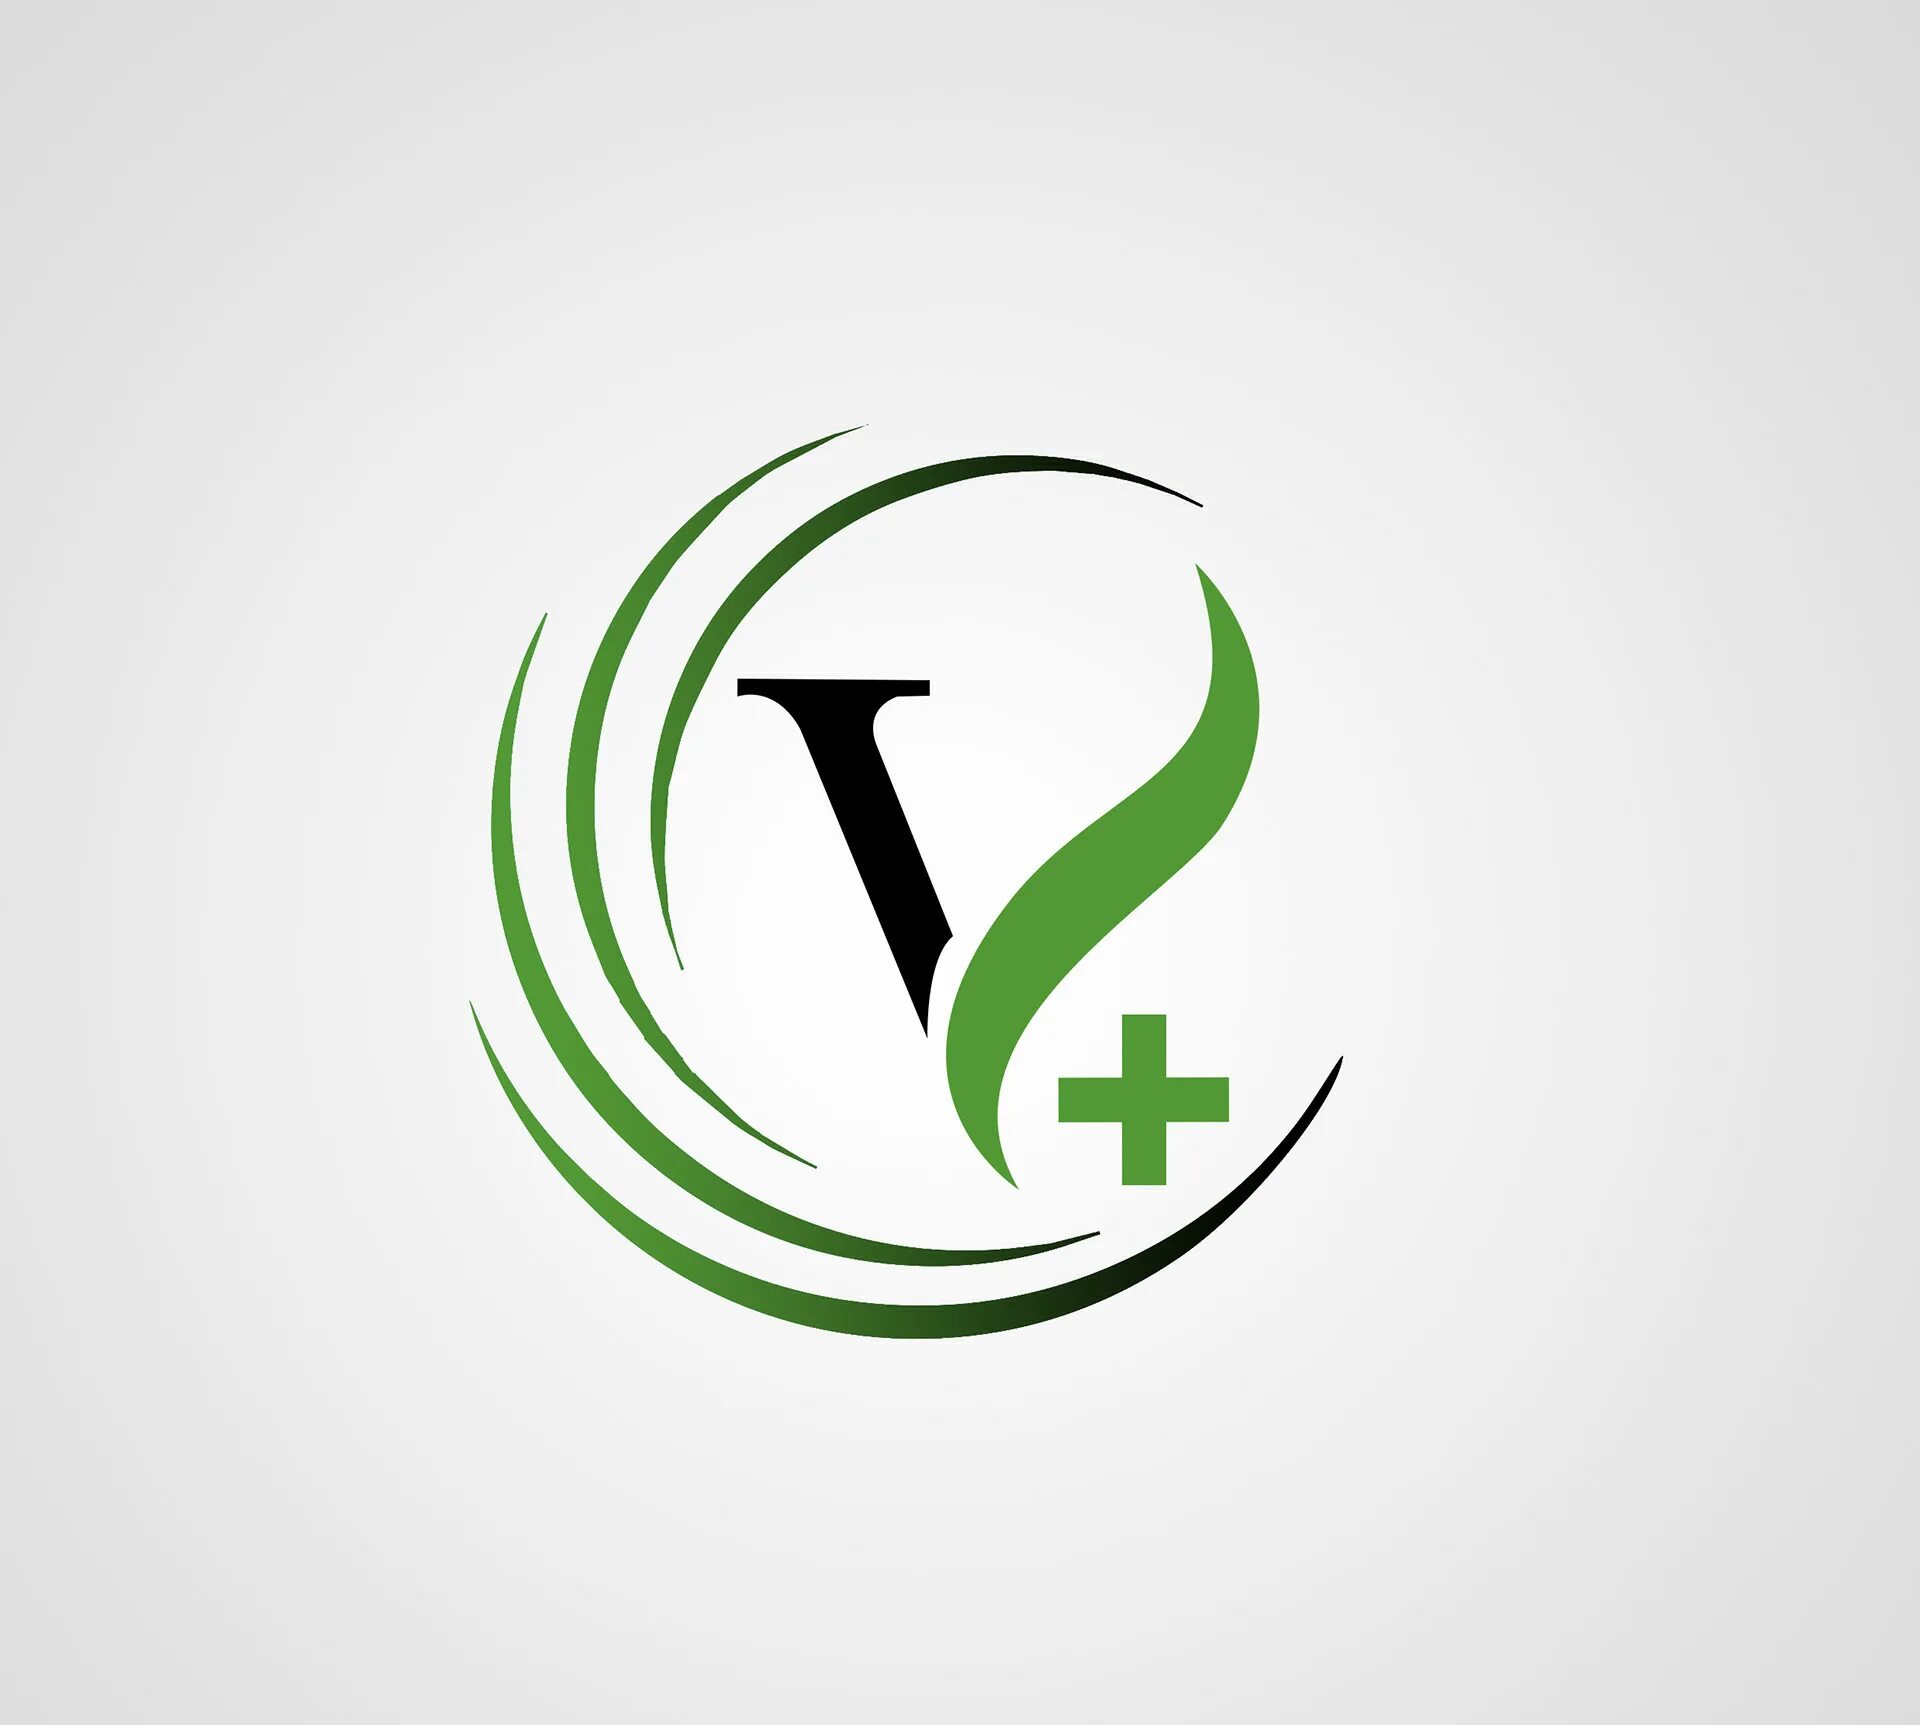 Creative v. Логотип v. Значок вегетарианства. Вегетарианство пиктограмма. Логотип с буквой v.